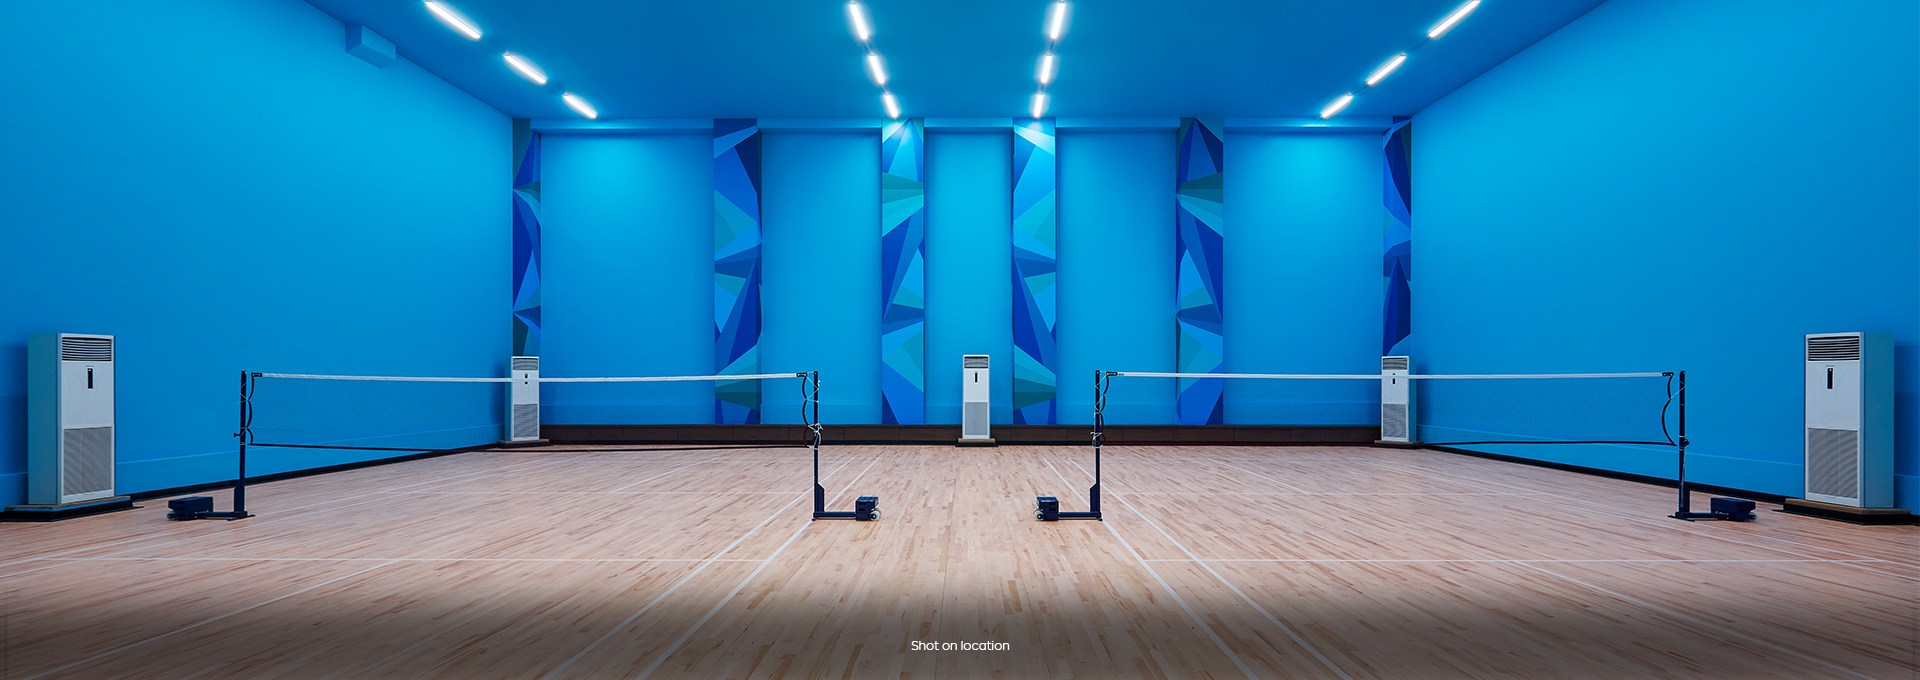 Aralia Badminton Courts